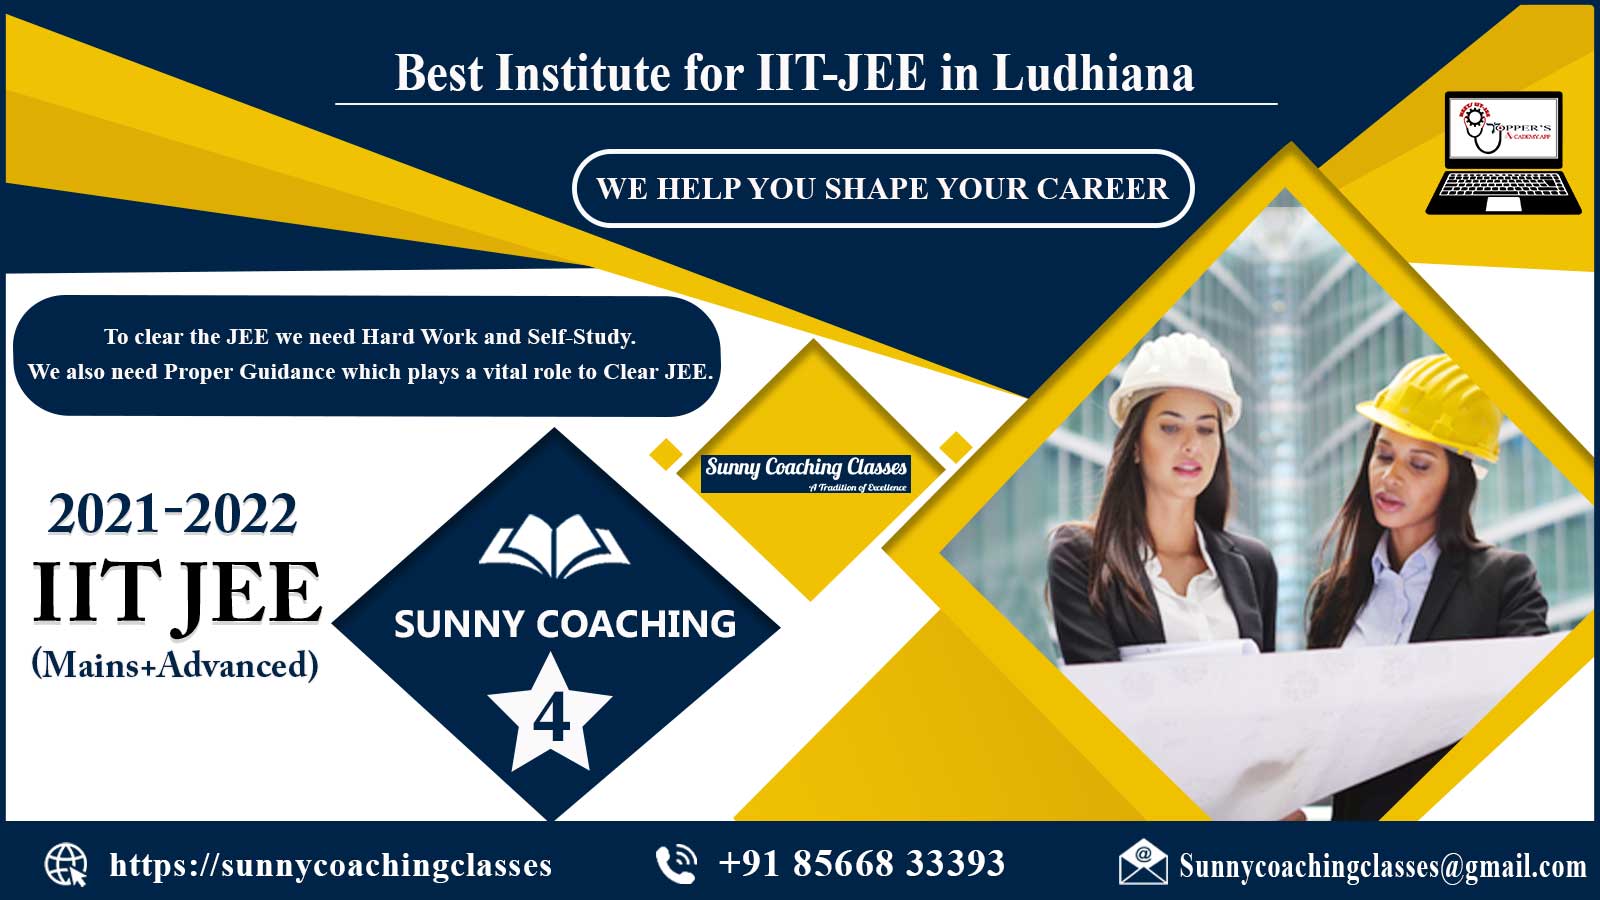 Sunny Coaching Classes in Ludhiana